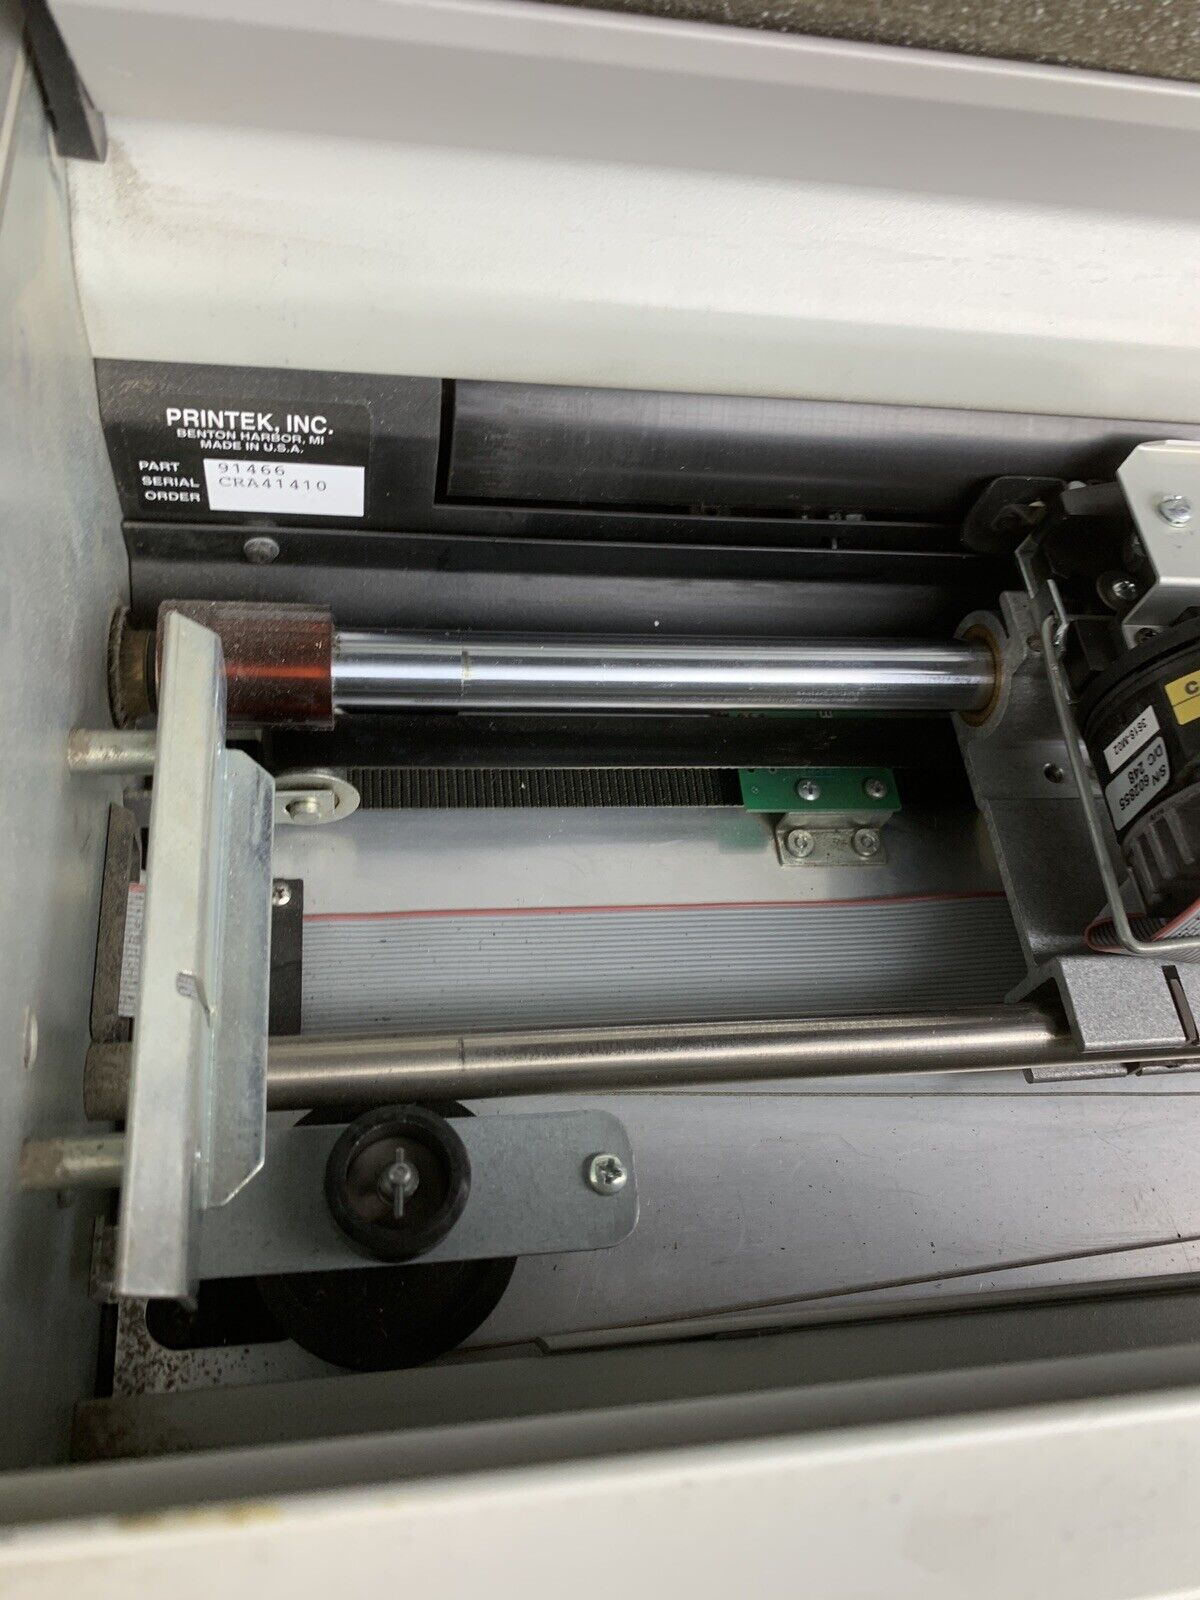 Printek Formspro 4503 90484 Dot Matrix Printer Tested